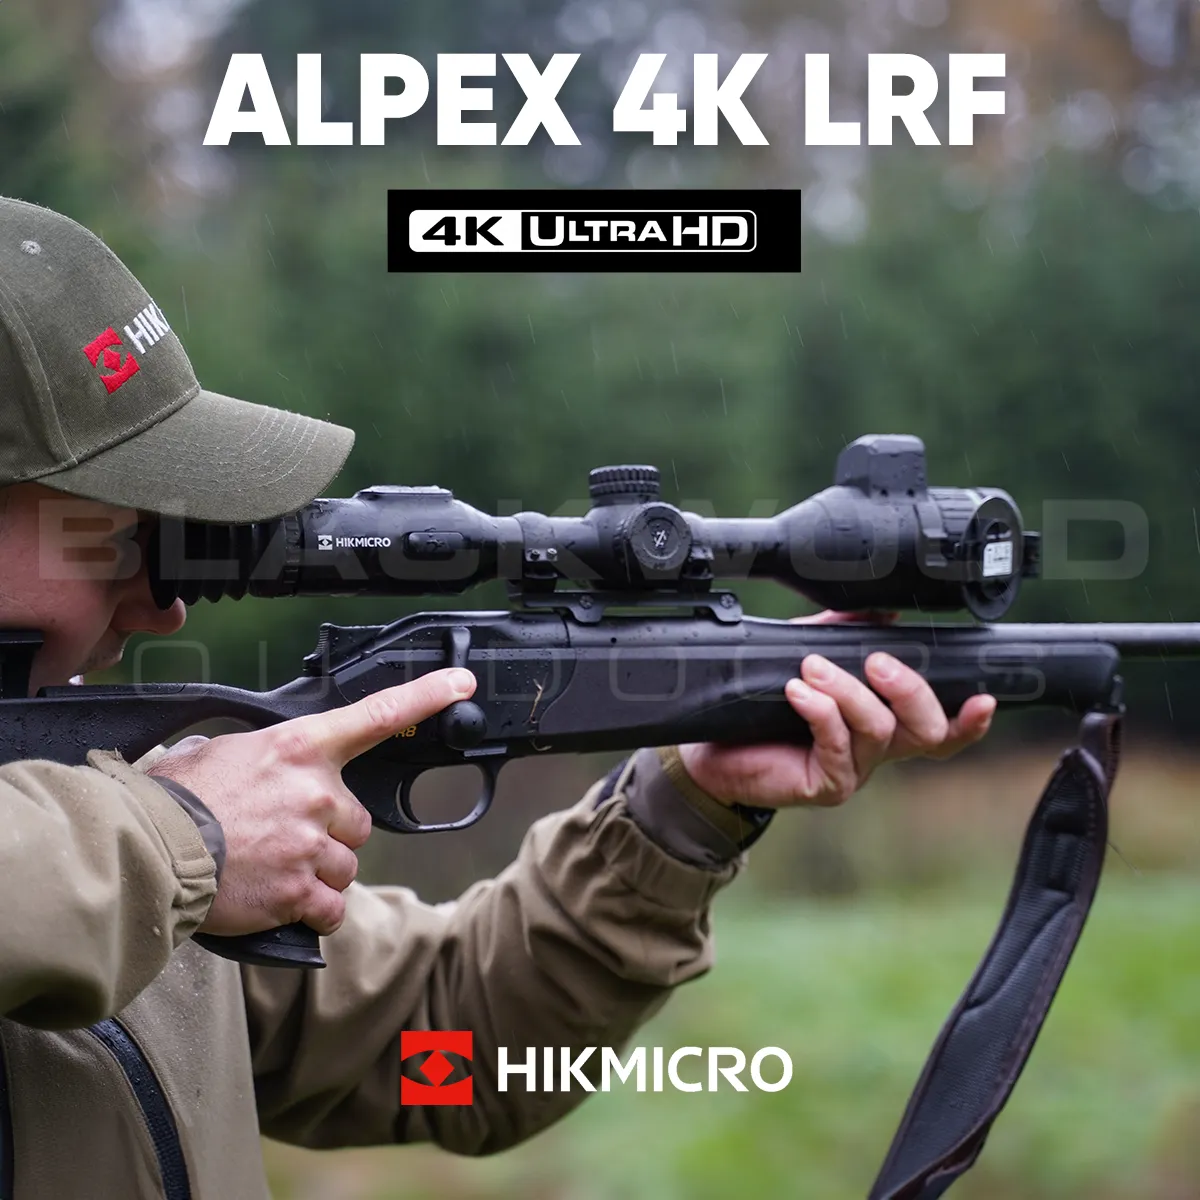 HikMicro Alpex 4K LRF Night Vision Scope